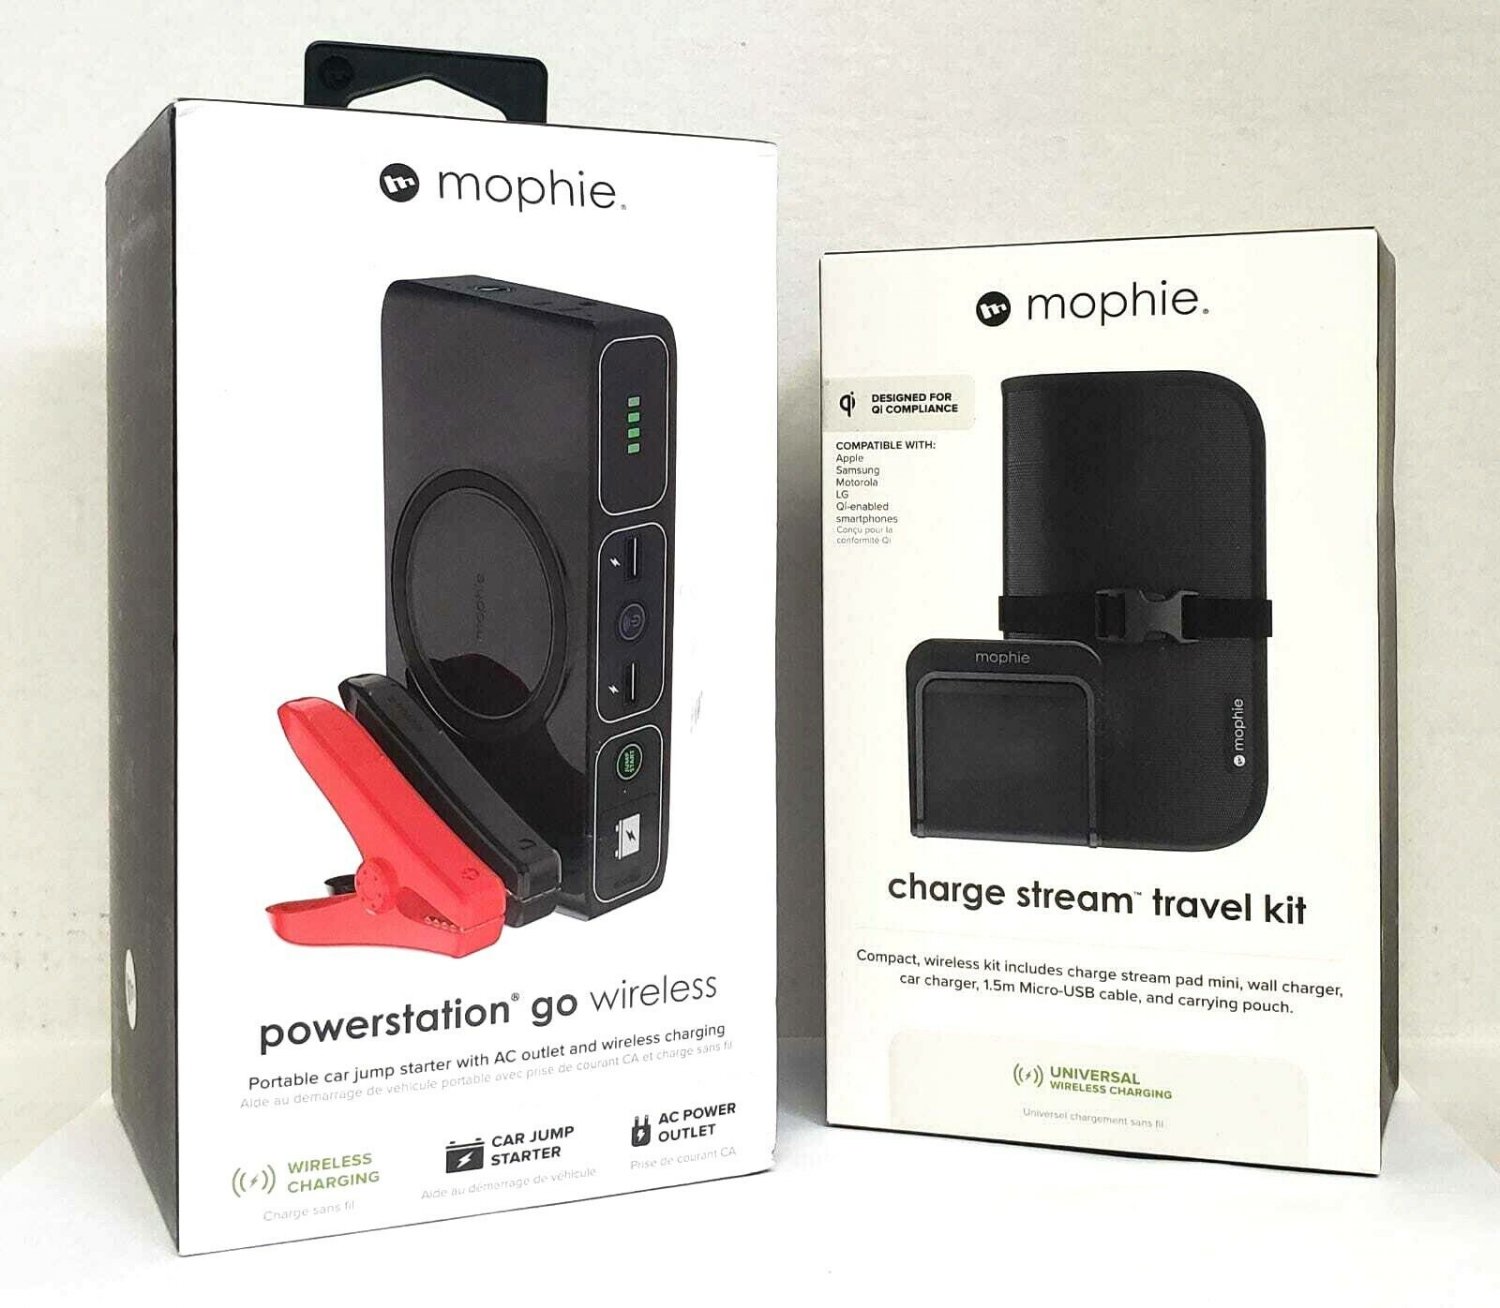 mophie Powerstation Go Portable Car Jump Starter & Charge Stream Travel Kit